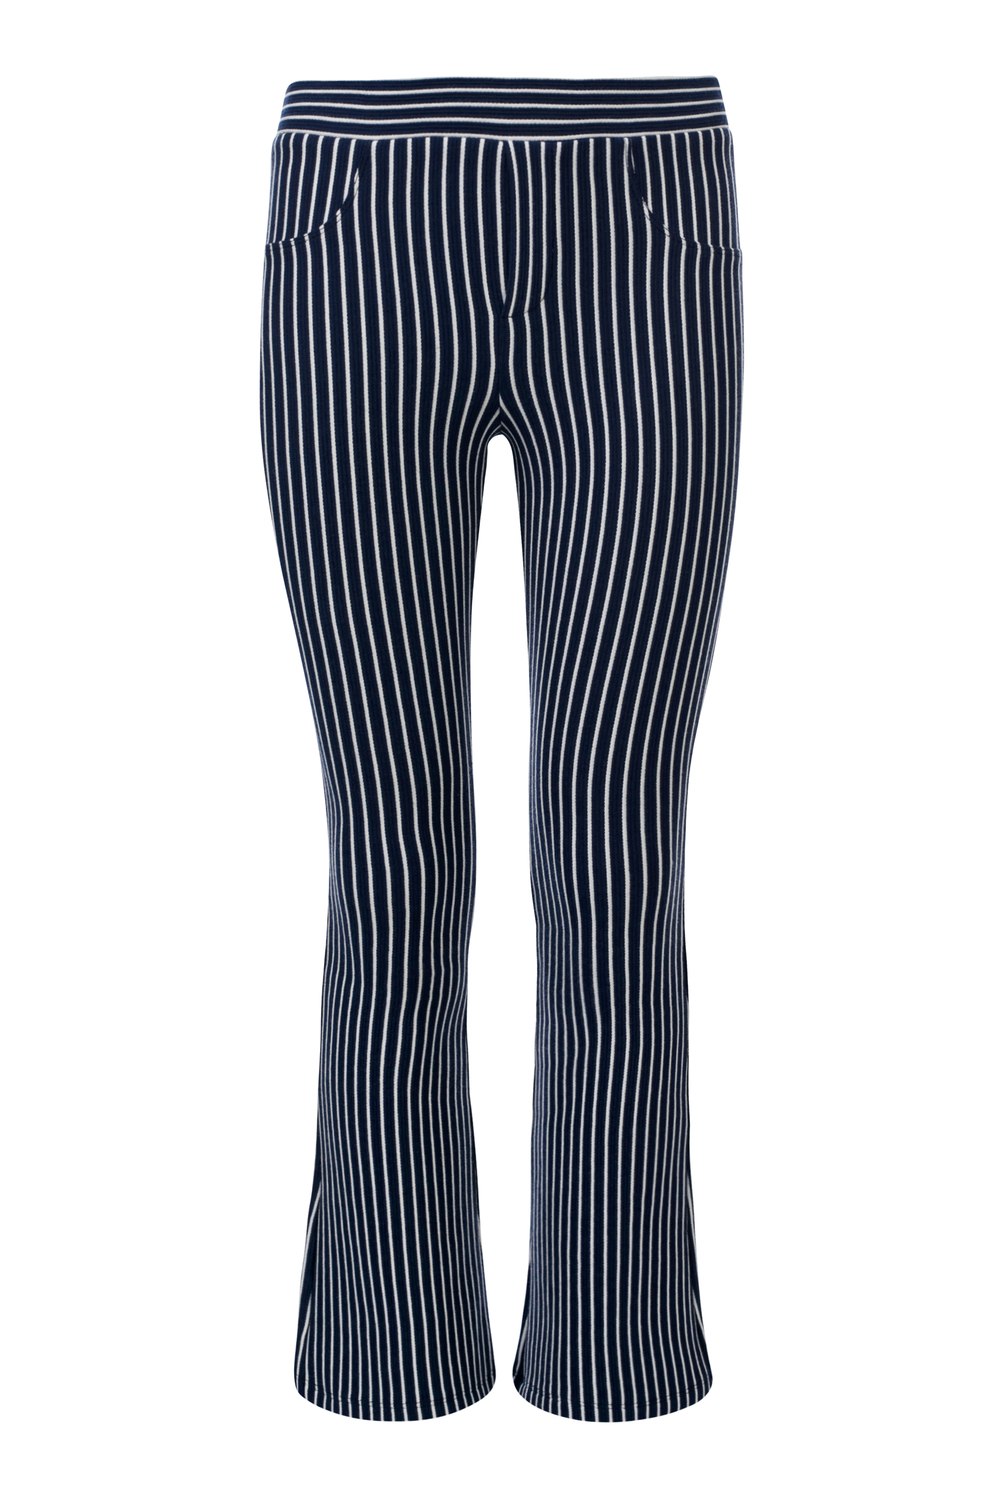 Loox's Revol. Long pants stripe flared Trousers